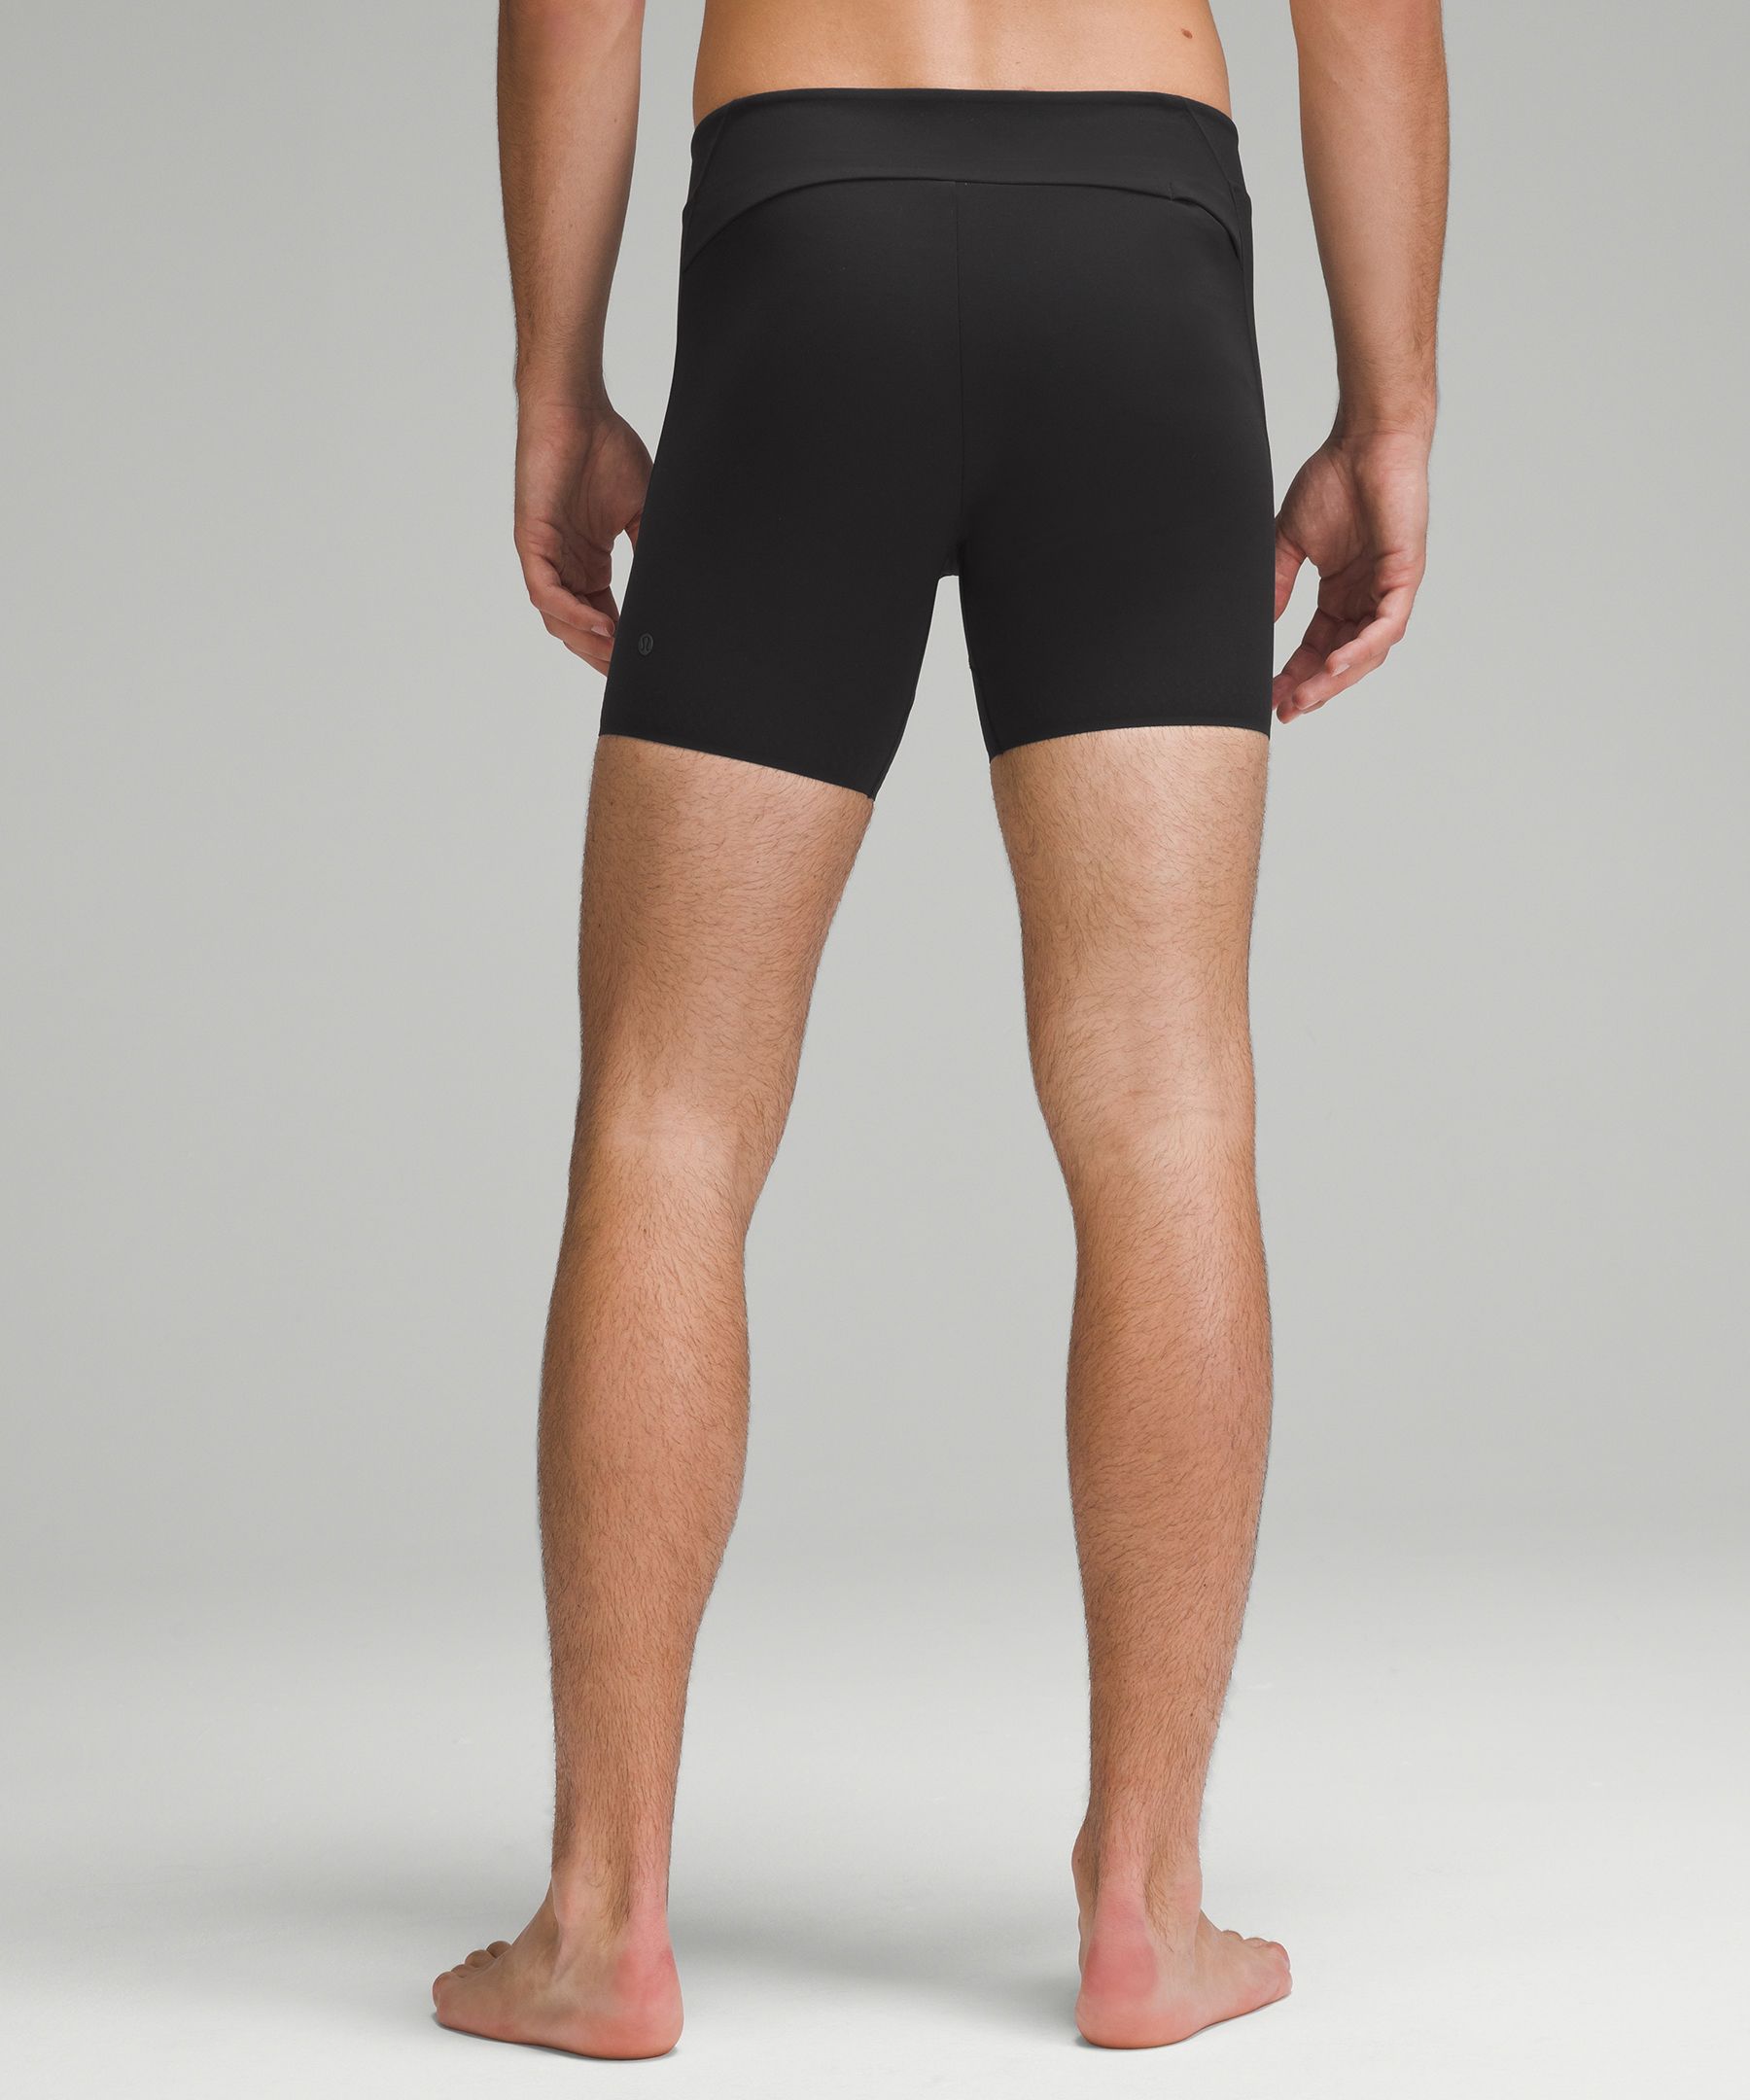 Everlux Yoga Short 6, Men's Shorts